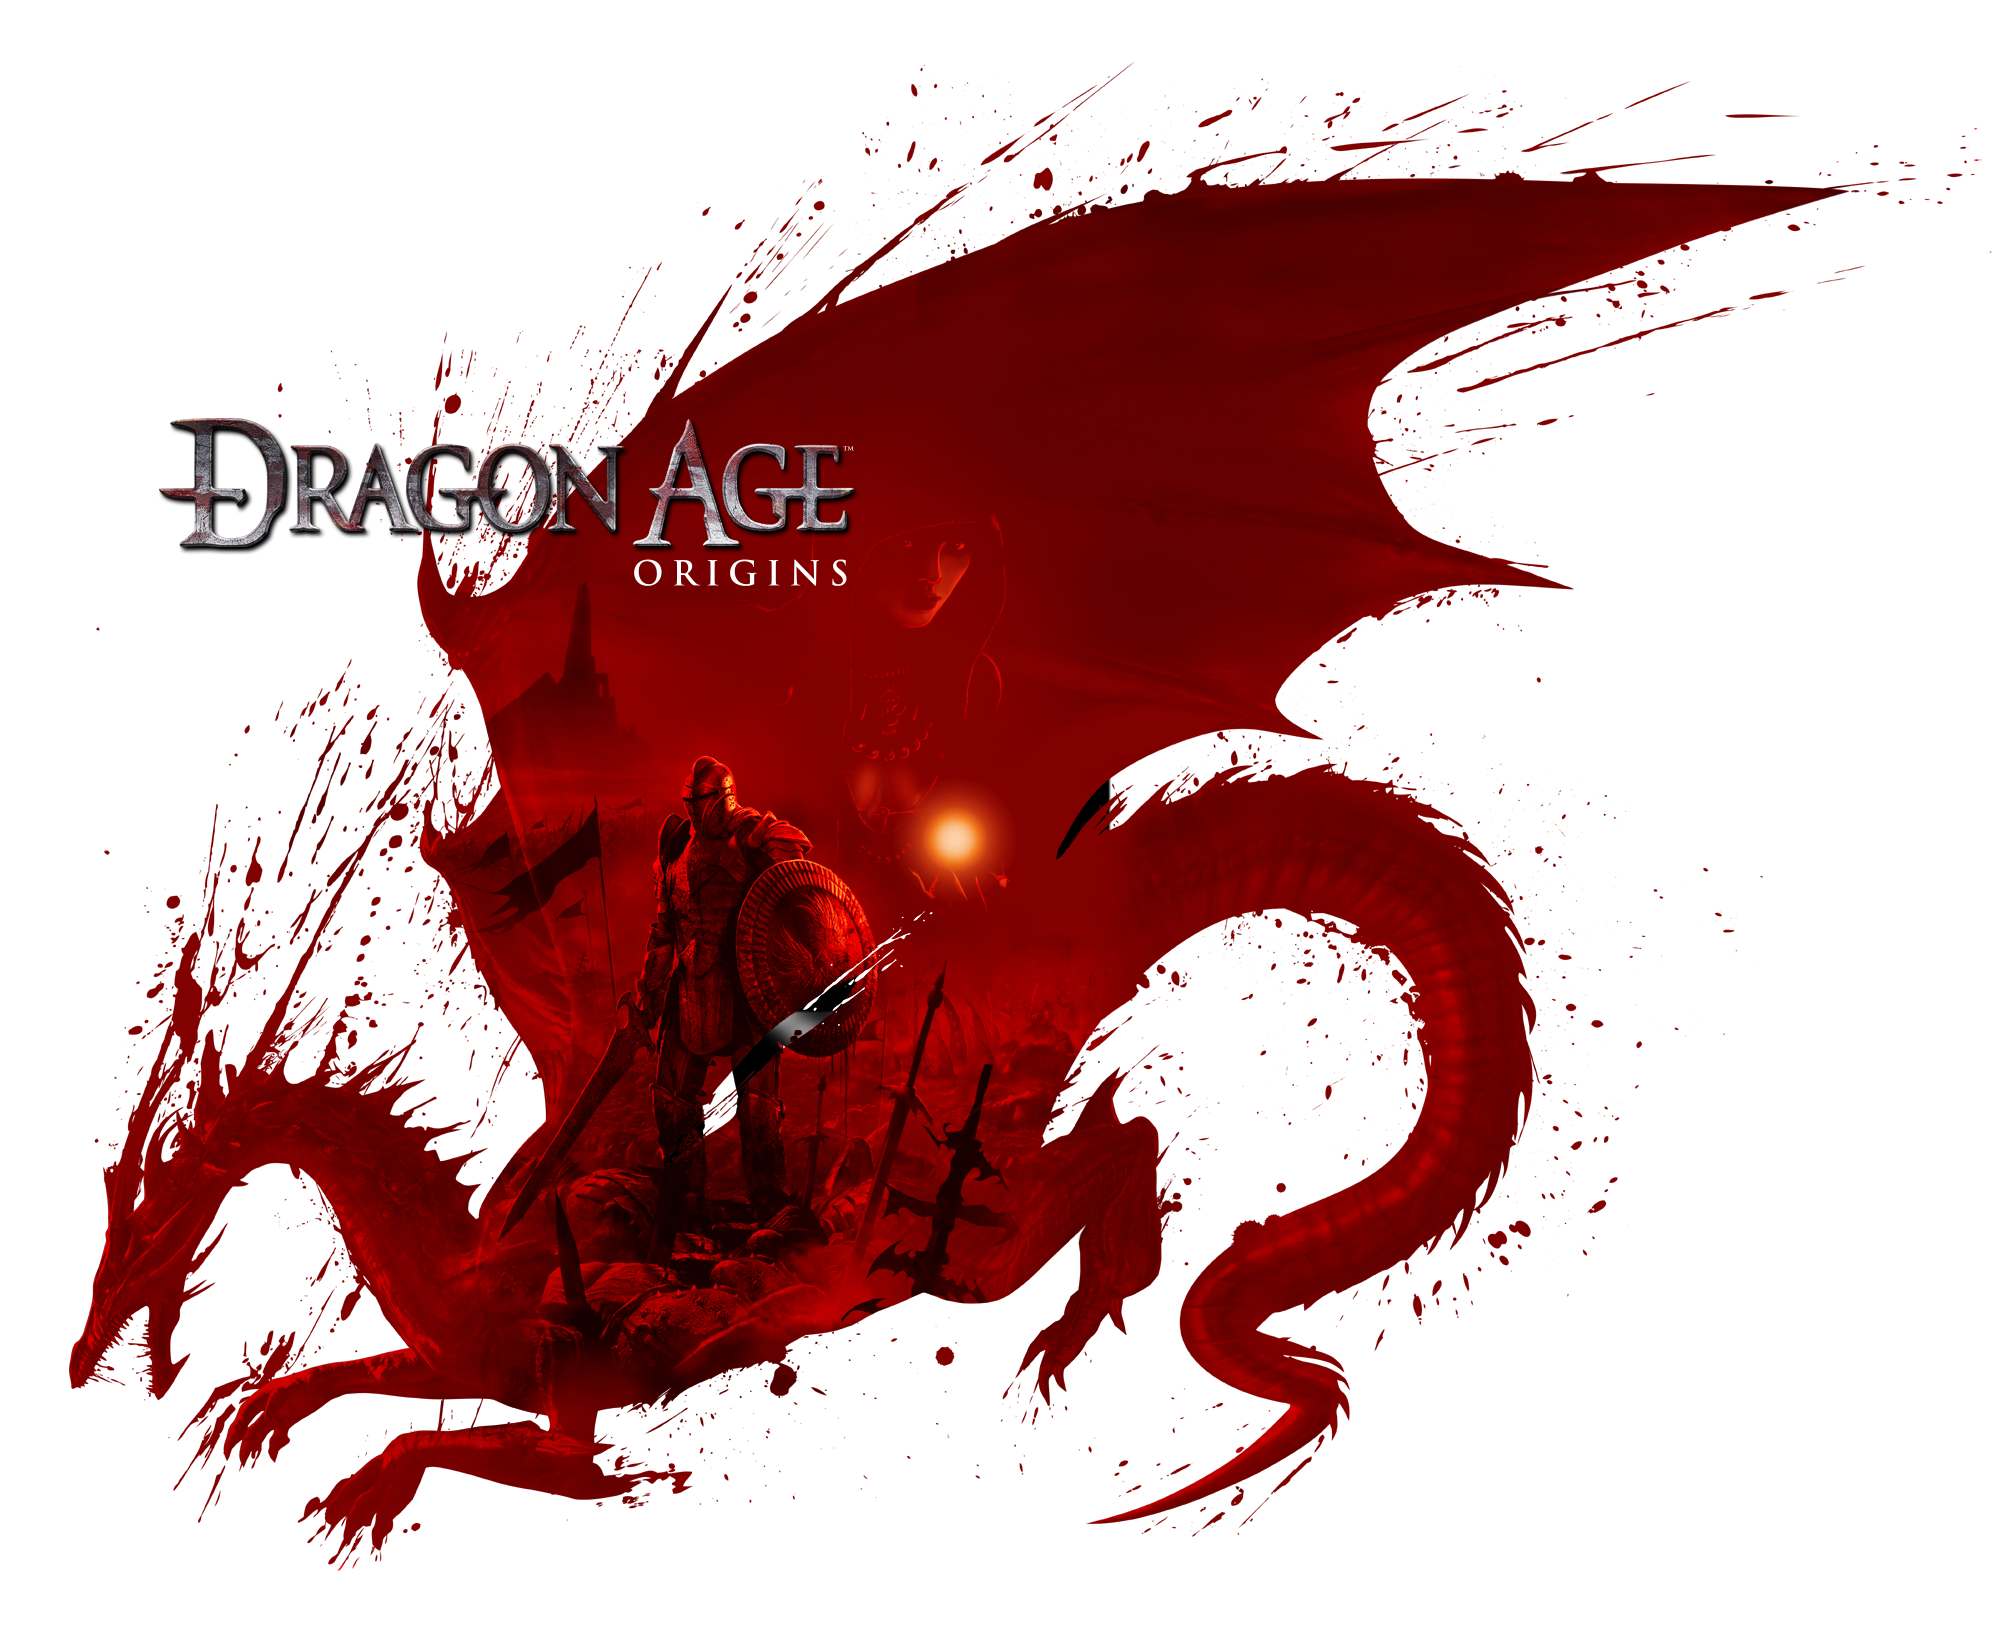 dragon age origins 1.05 trainer